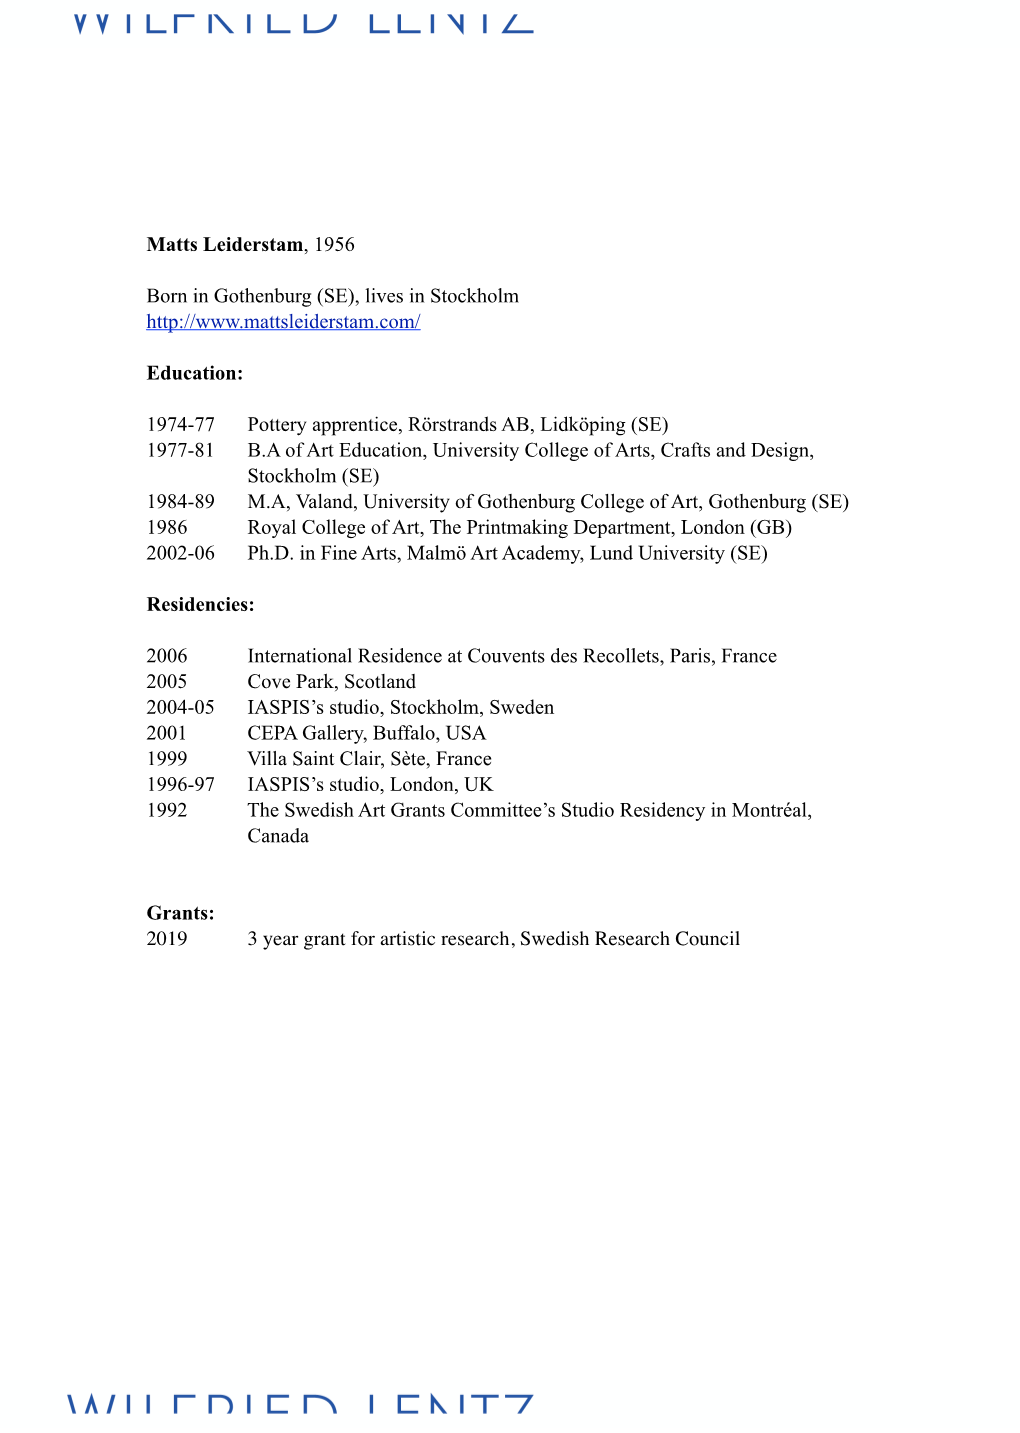 Matts Leiderstam CV WL 30.1.20